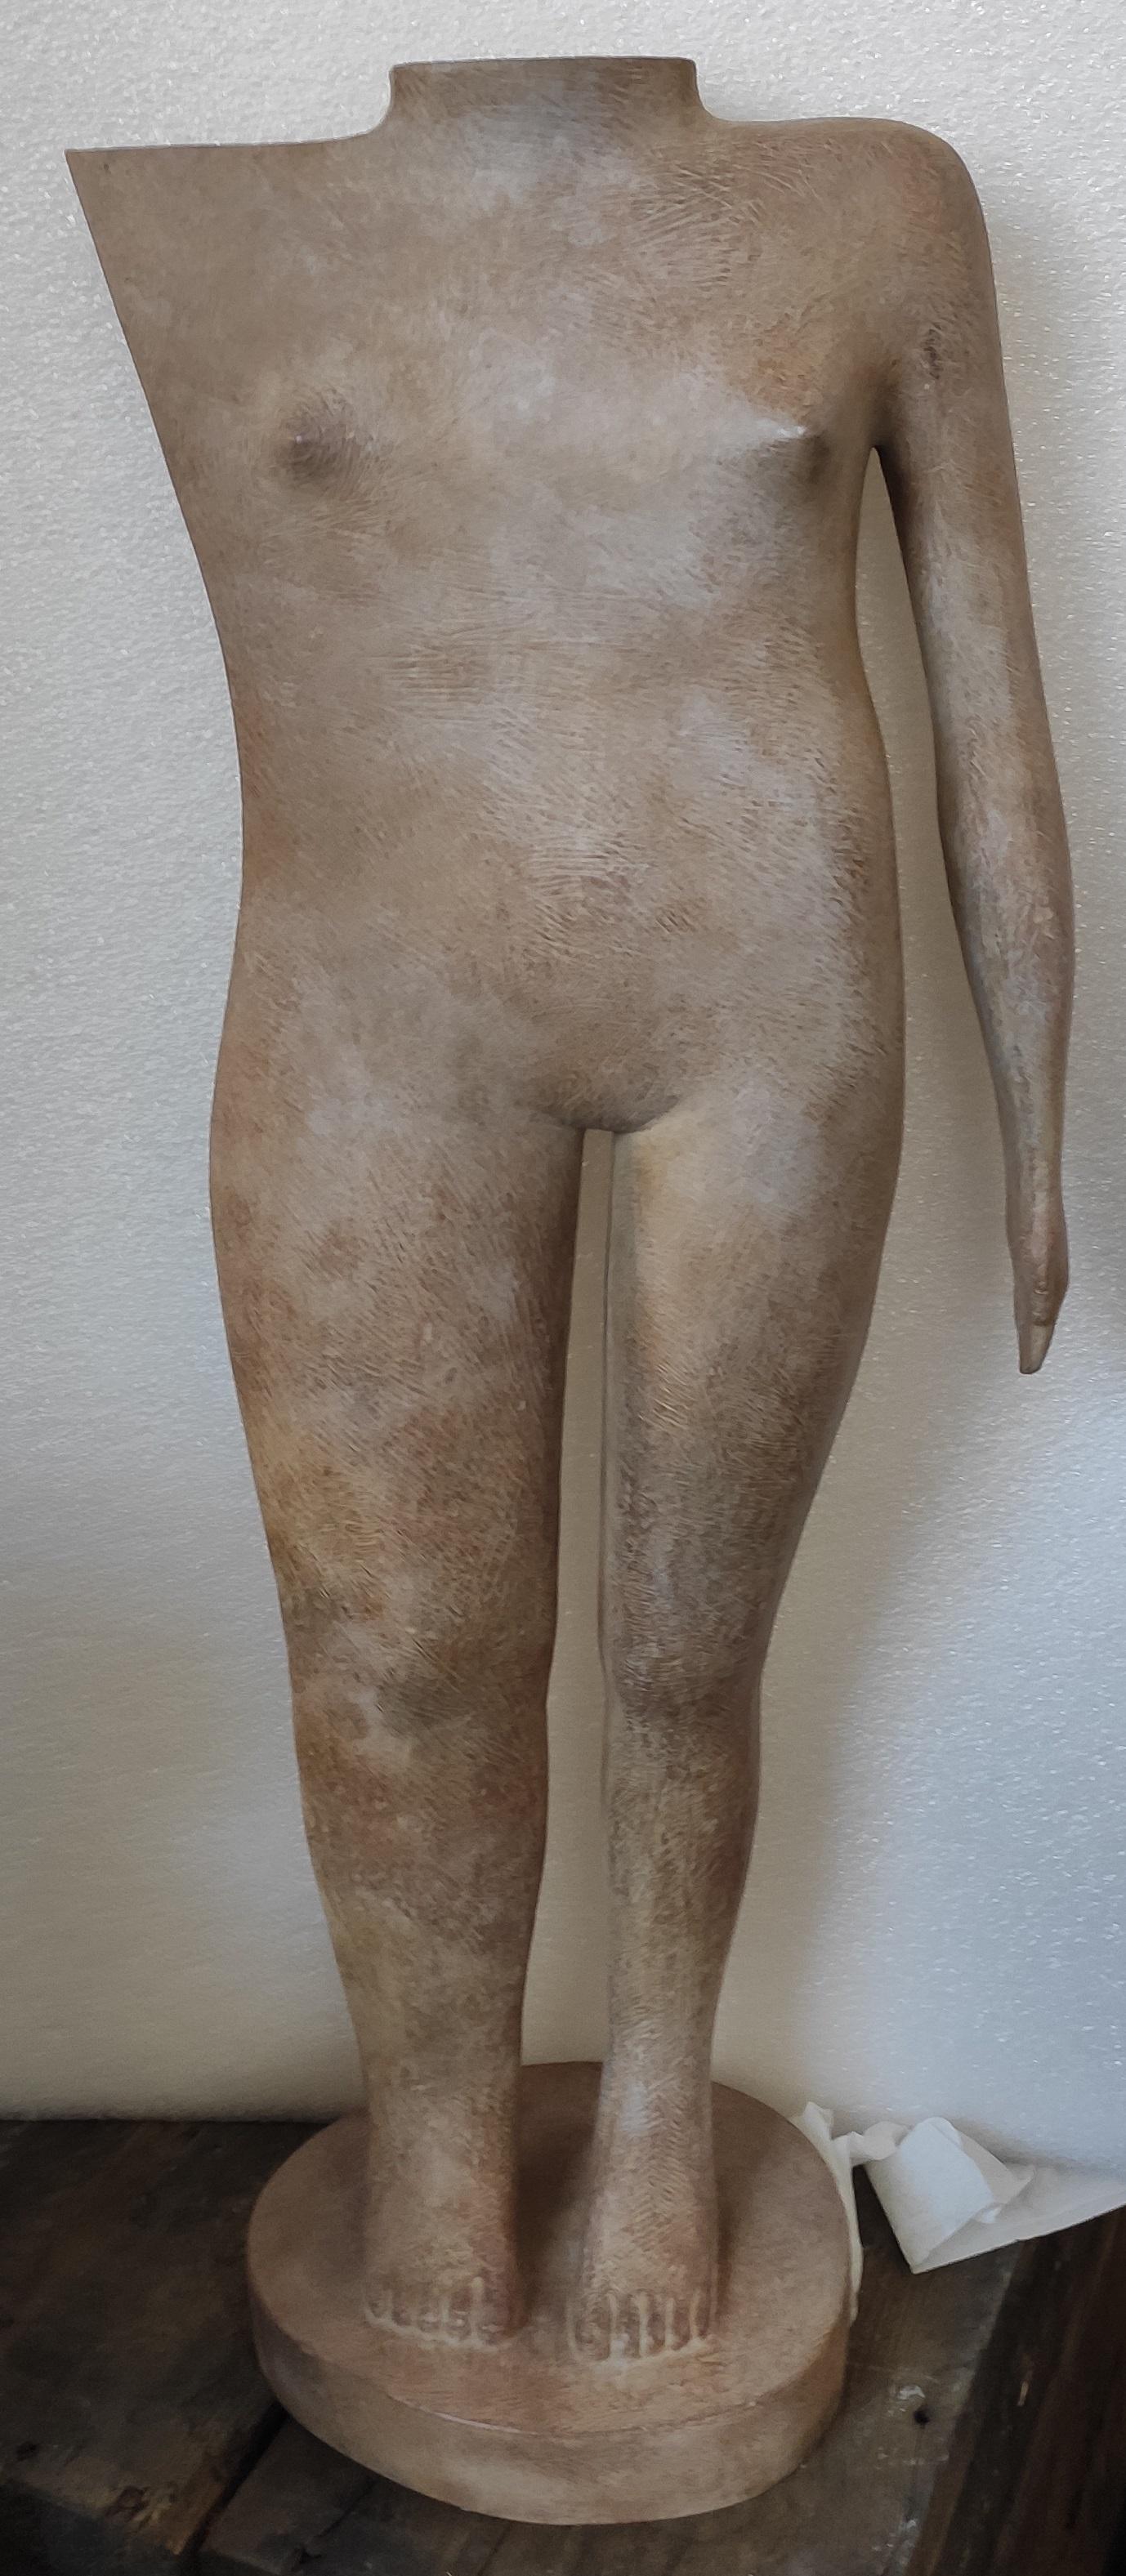 Puberta Standing Figure Bronze Sculpture Nude Body  - Gold Figurative Sculpture by KOBE